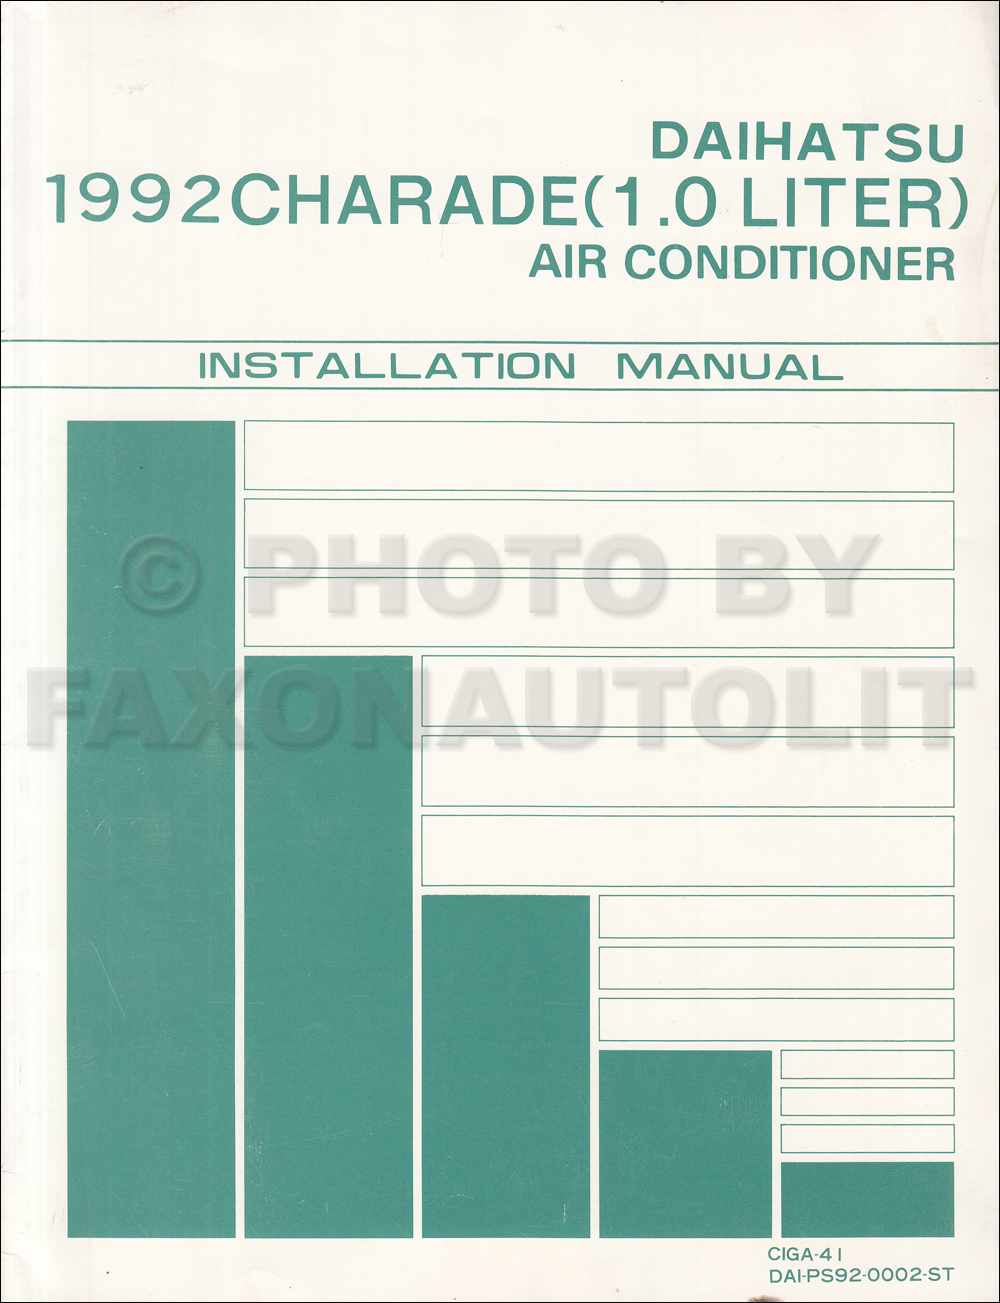 1992 Daihatsu Charade Air Conditioner Installation Manual Original 1.0 Liter